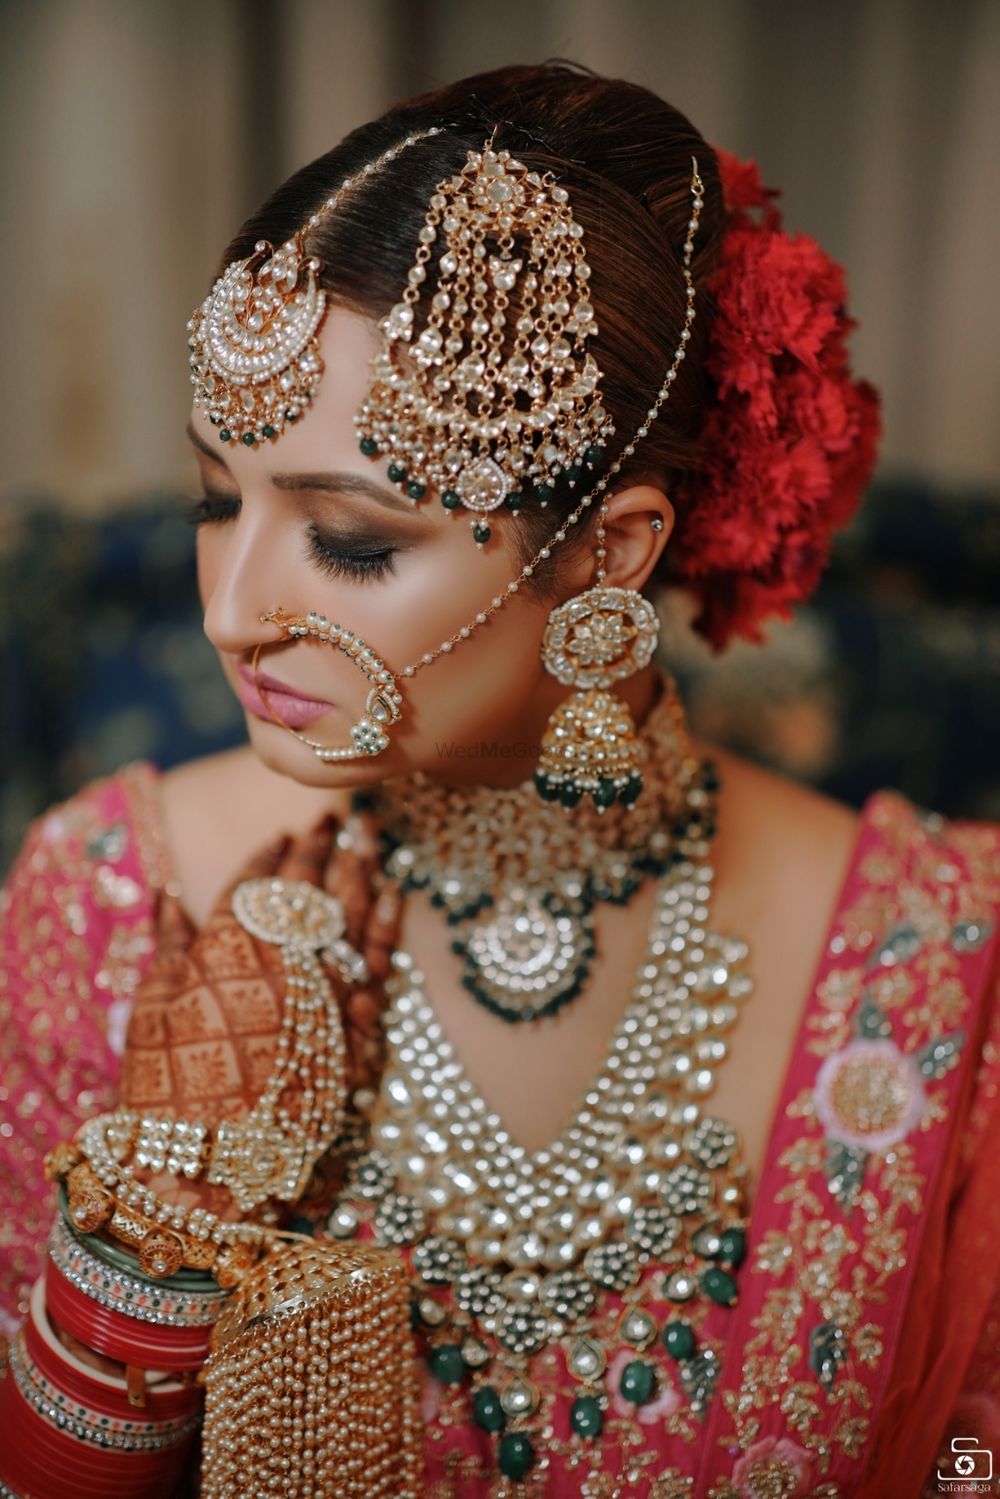 Photo of Bride wearing OTT jewellery on her wedding day.